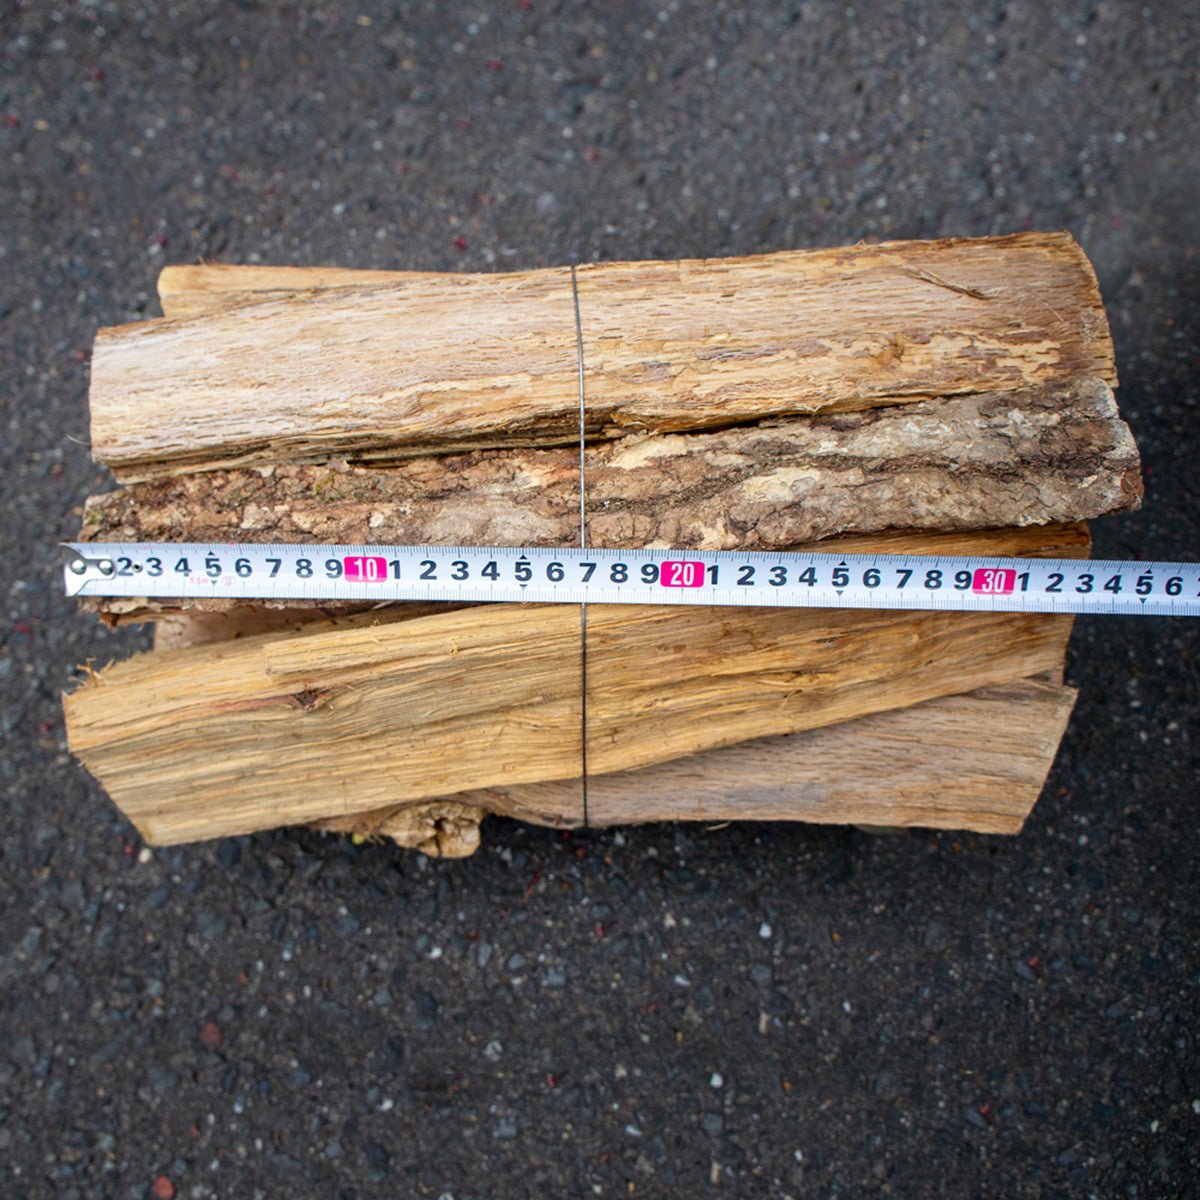 1 rank of Firewood (4 ft. x 8 ft.) Delivered & Dumped